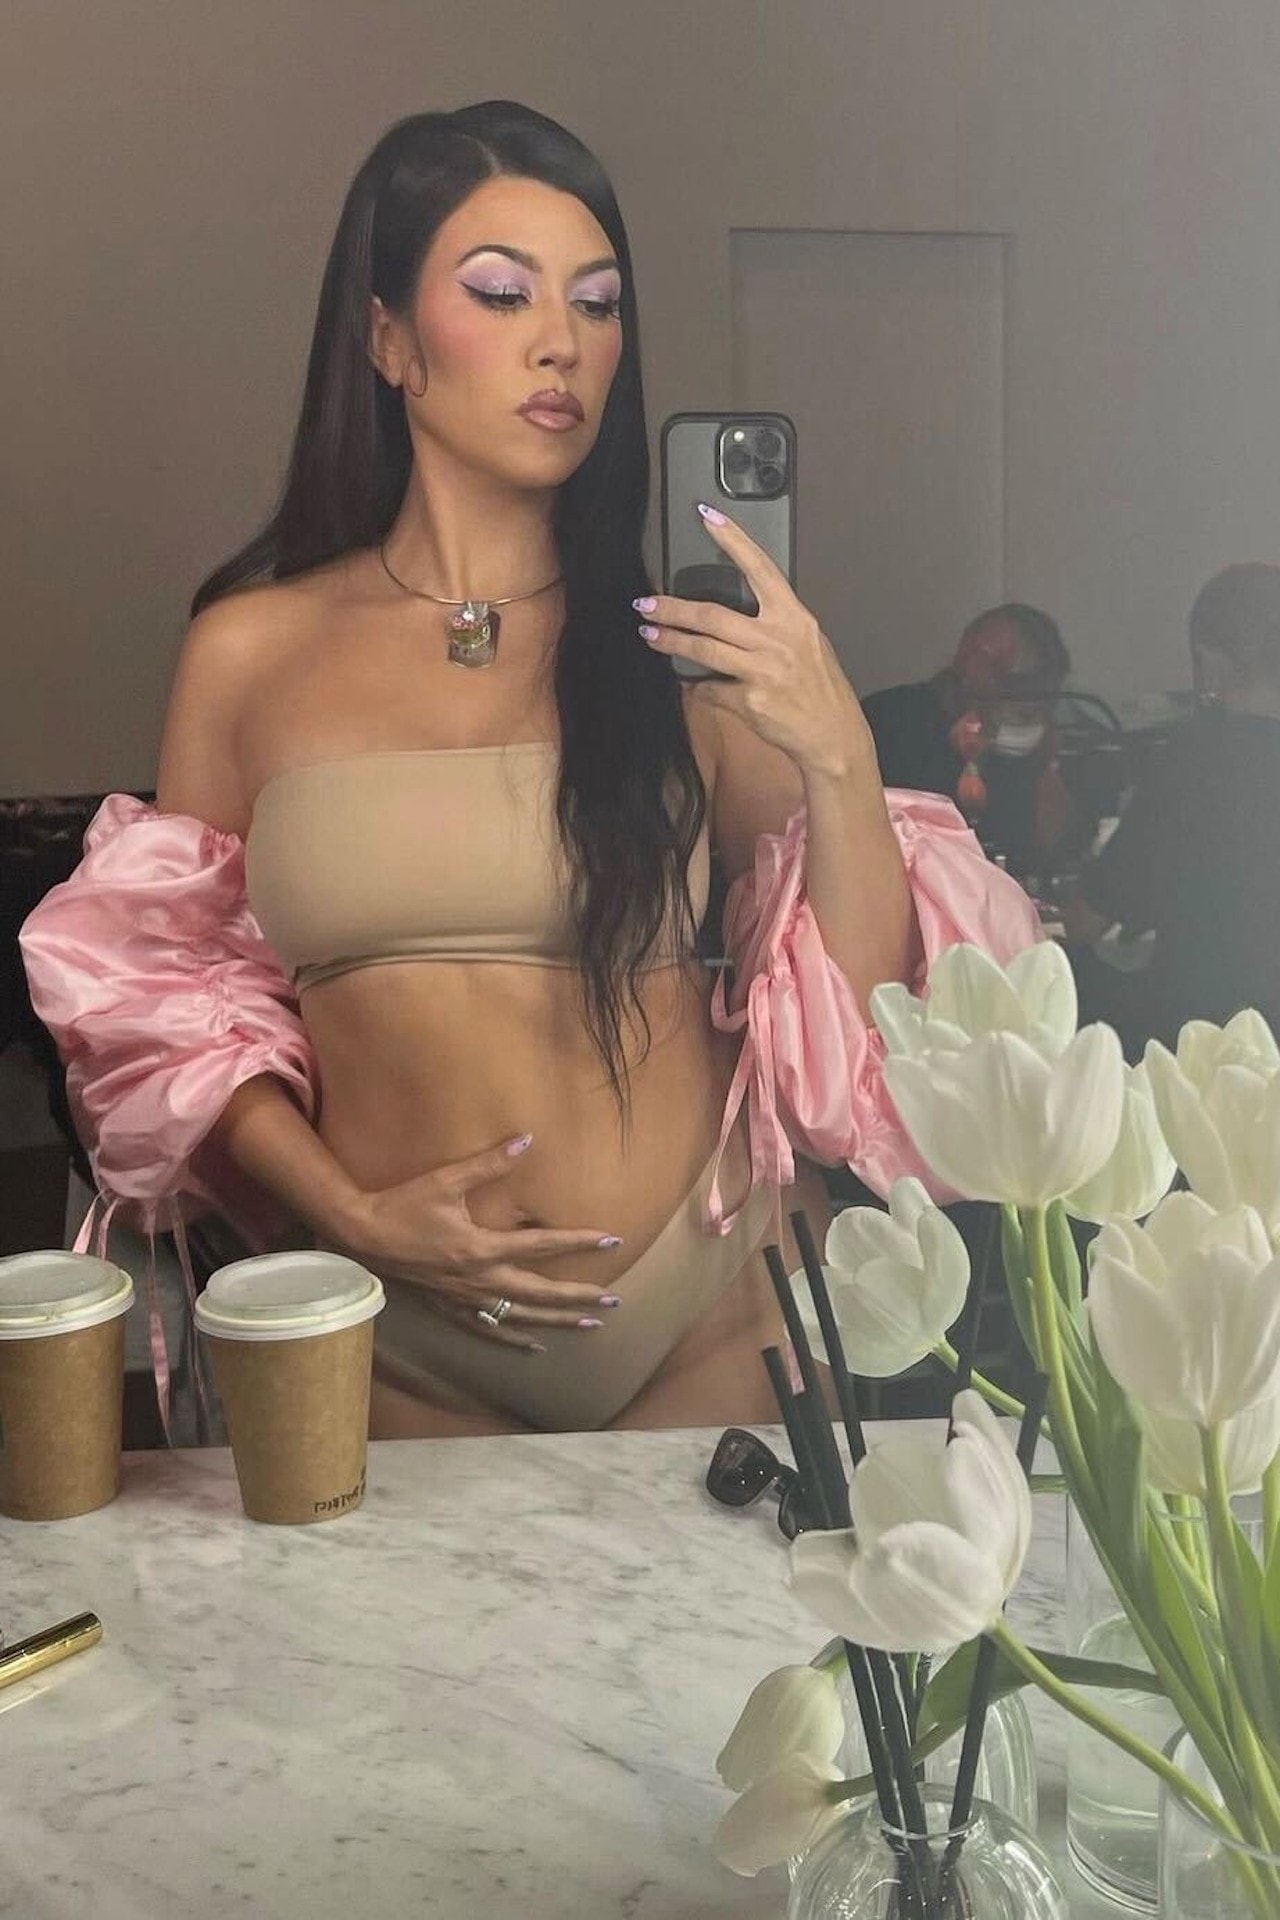 kourtney kardashian instagram pregnancy speculation rumors clapback 